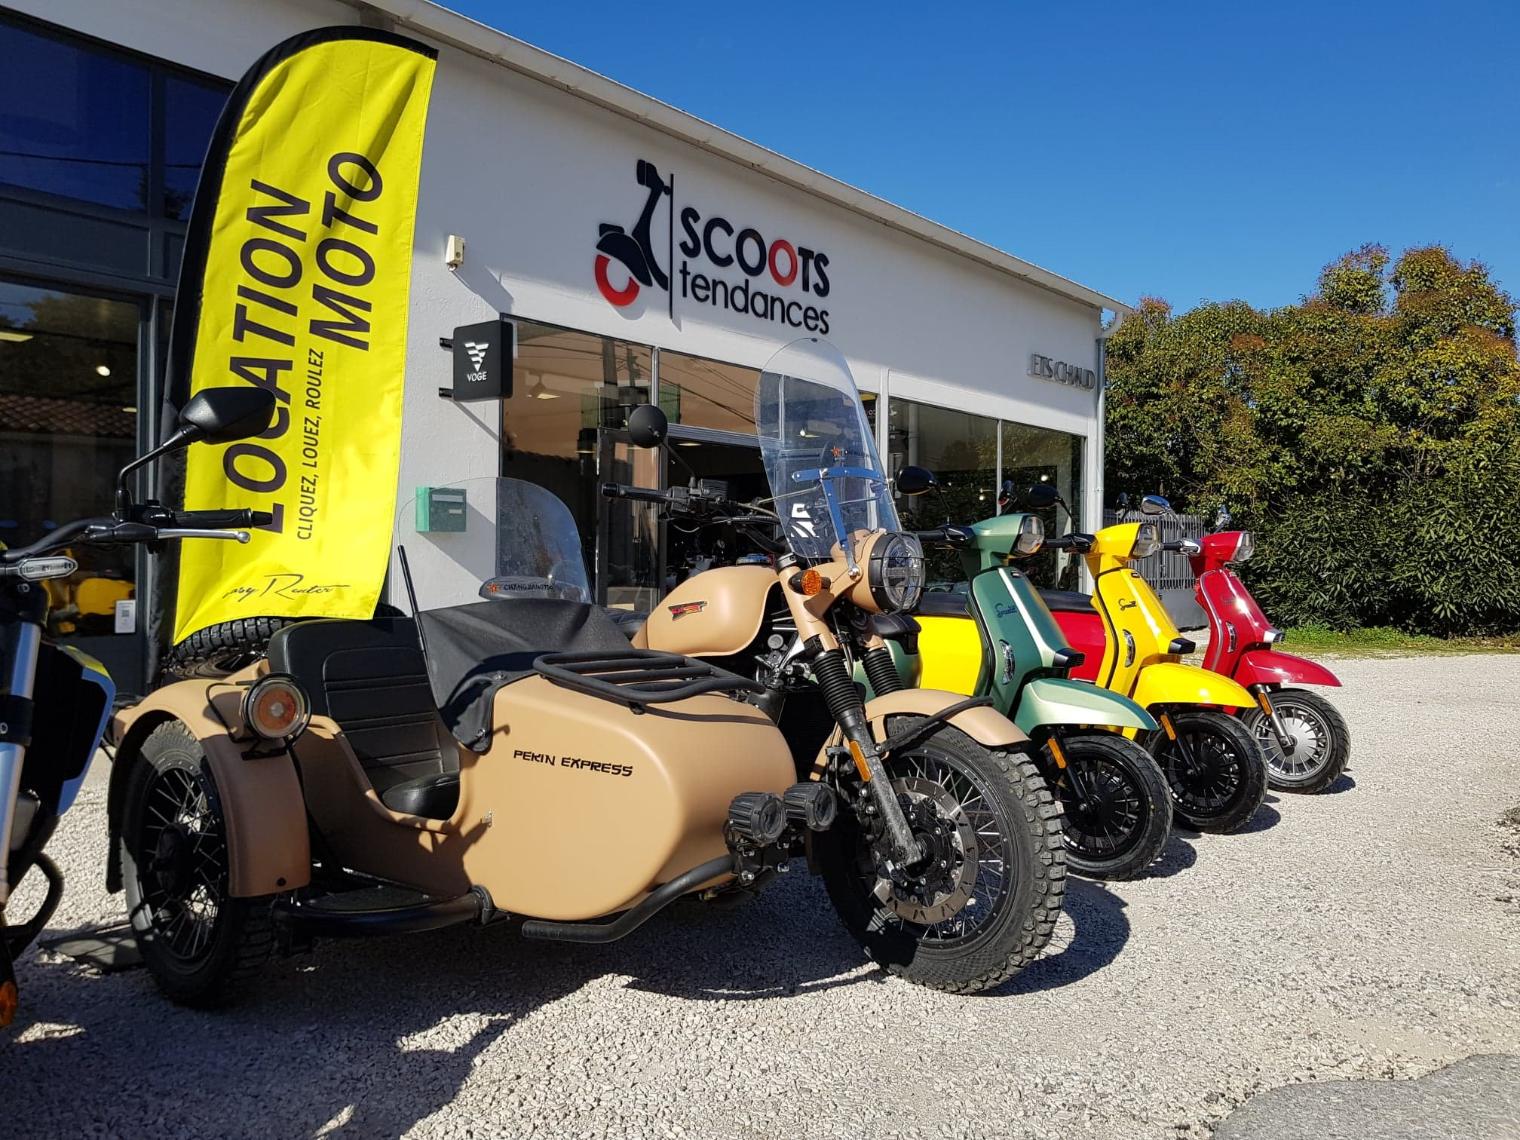 Fonds commerce Moto/ Scooter